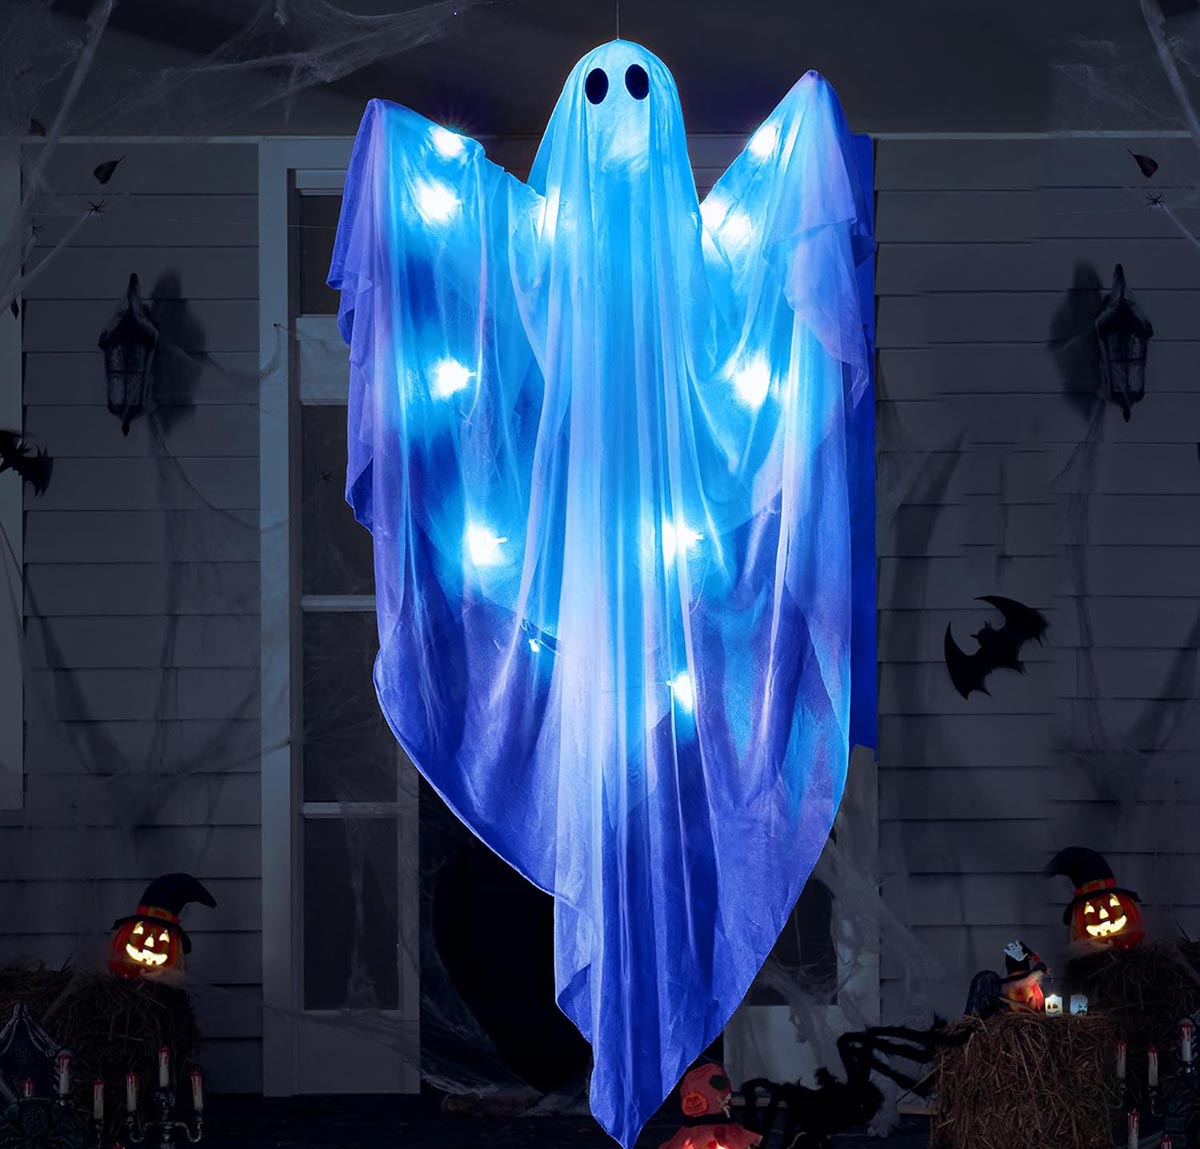 The Best Outdoor Halloween Decoration Option Joyin Hanging Light Up Ghost